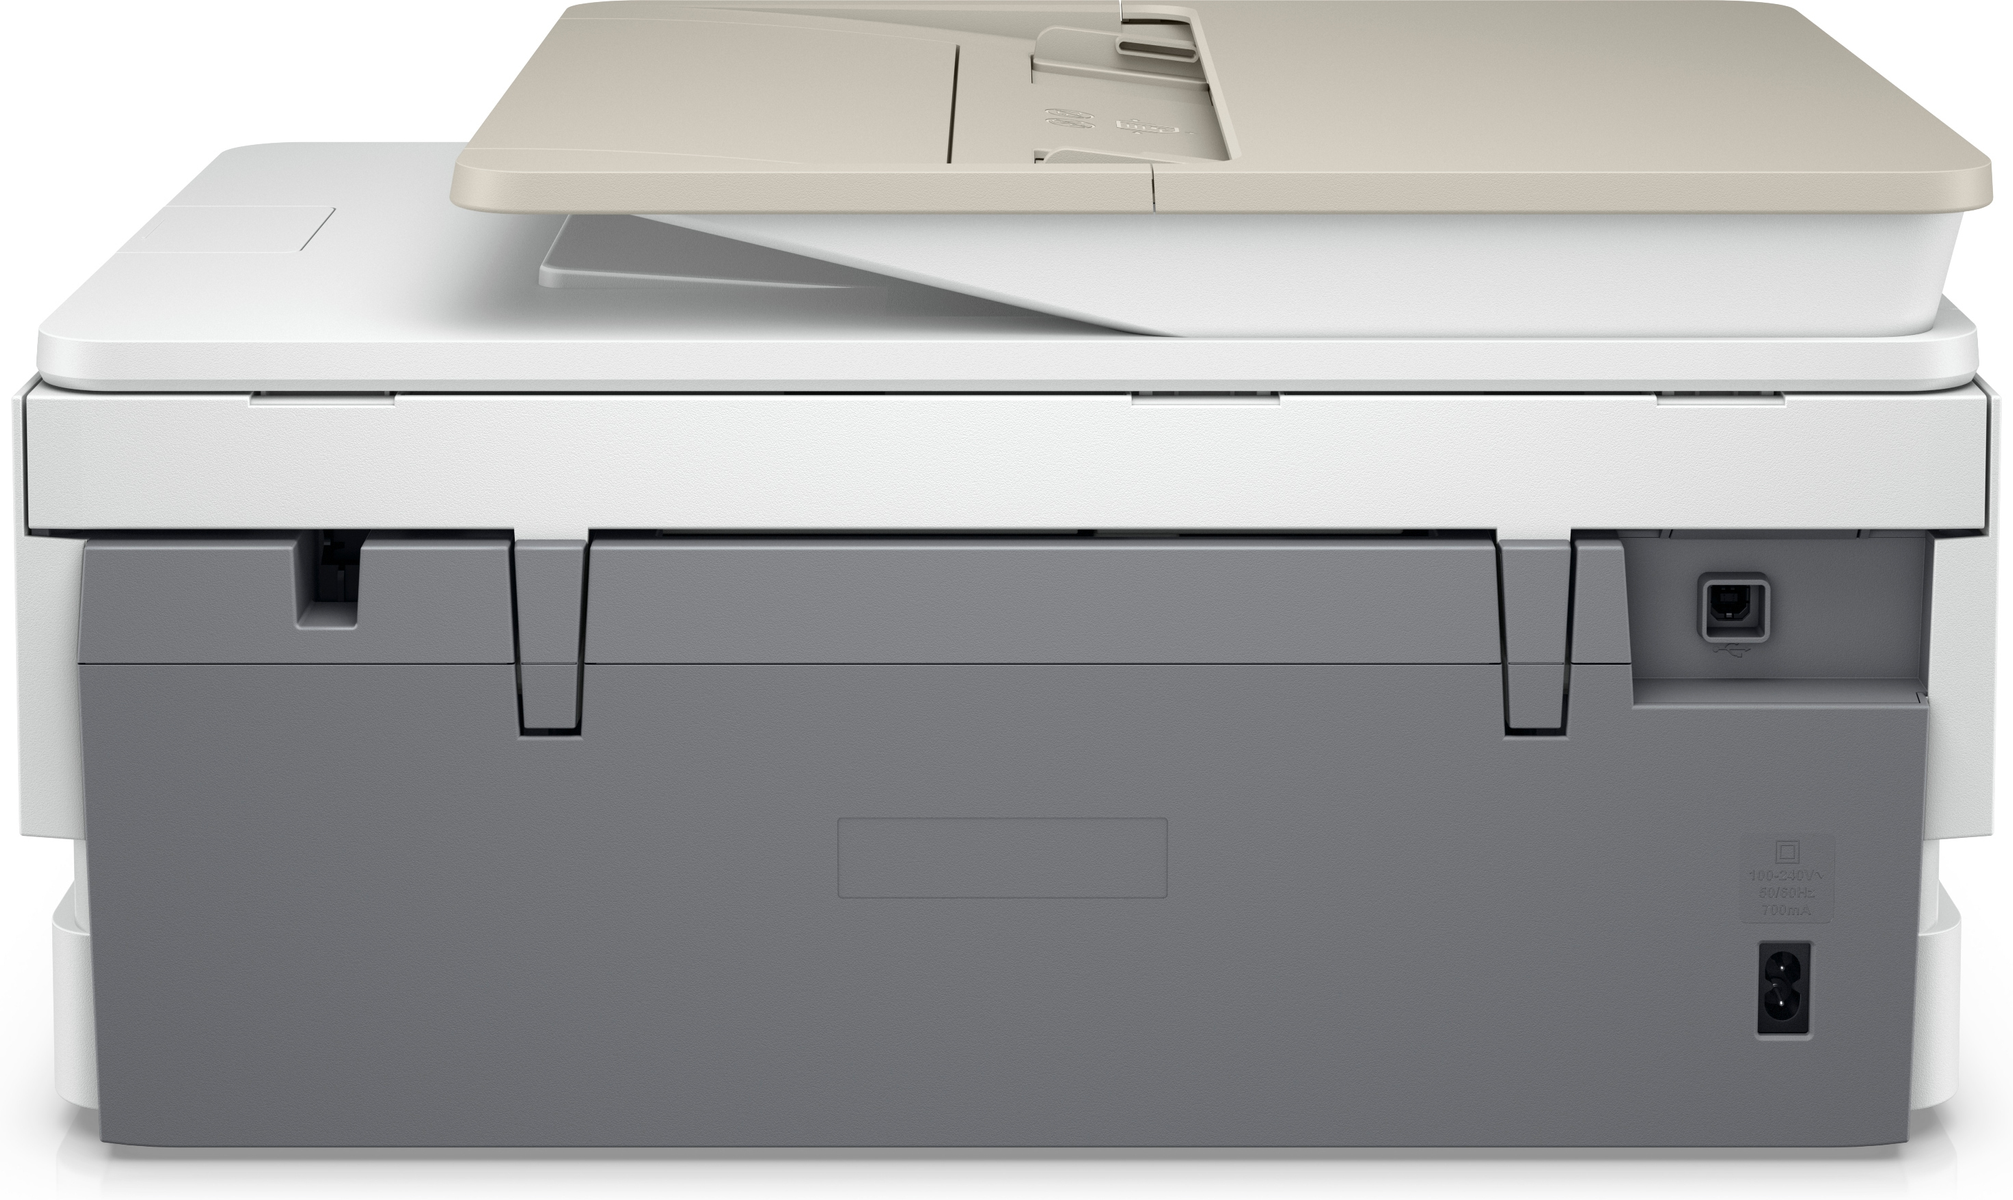 HP 7920E INSPIRE AIL-IN-ONE Thermal Inkjet Multifunktionsdrucker PRINTER WLAN ENVY